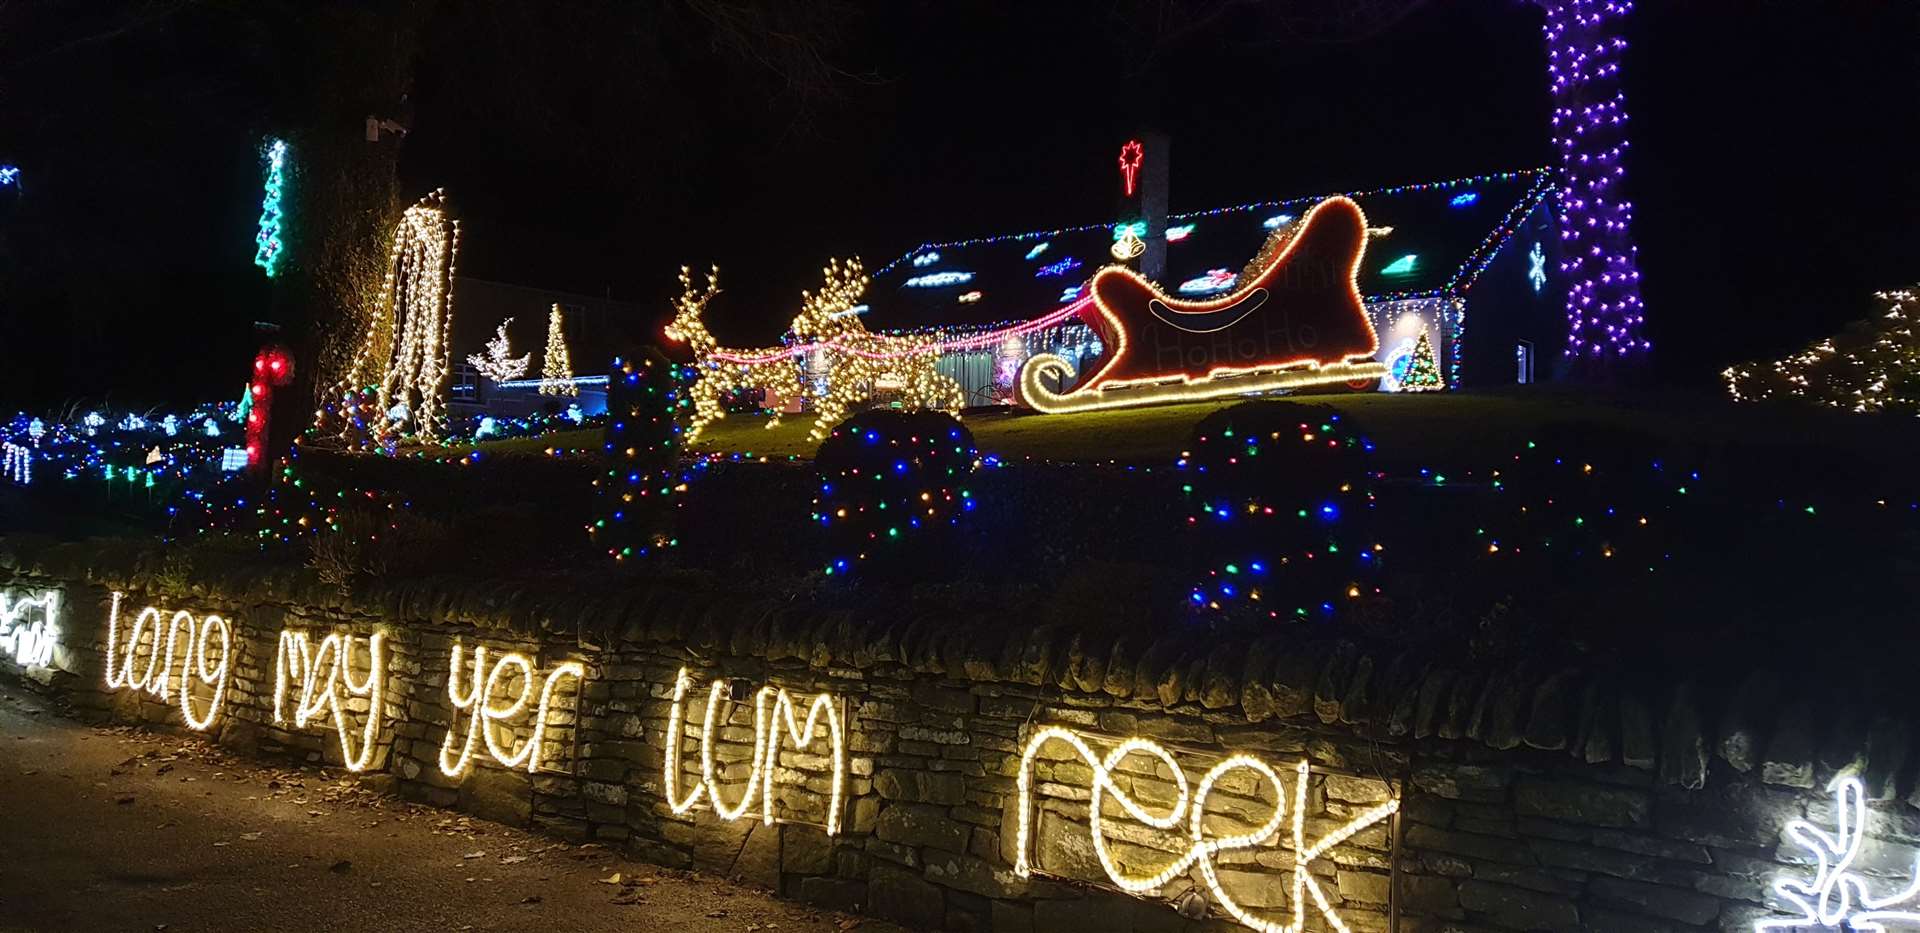 Callum Stuart's festive illuminations light up his house.